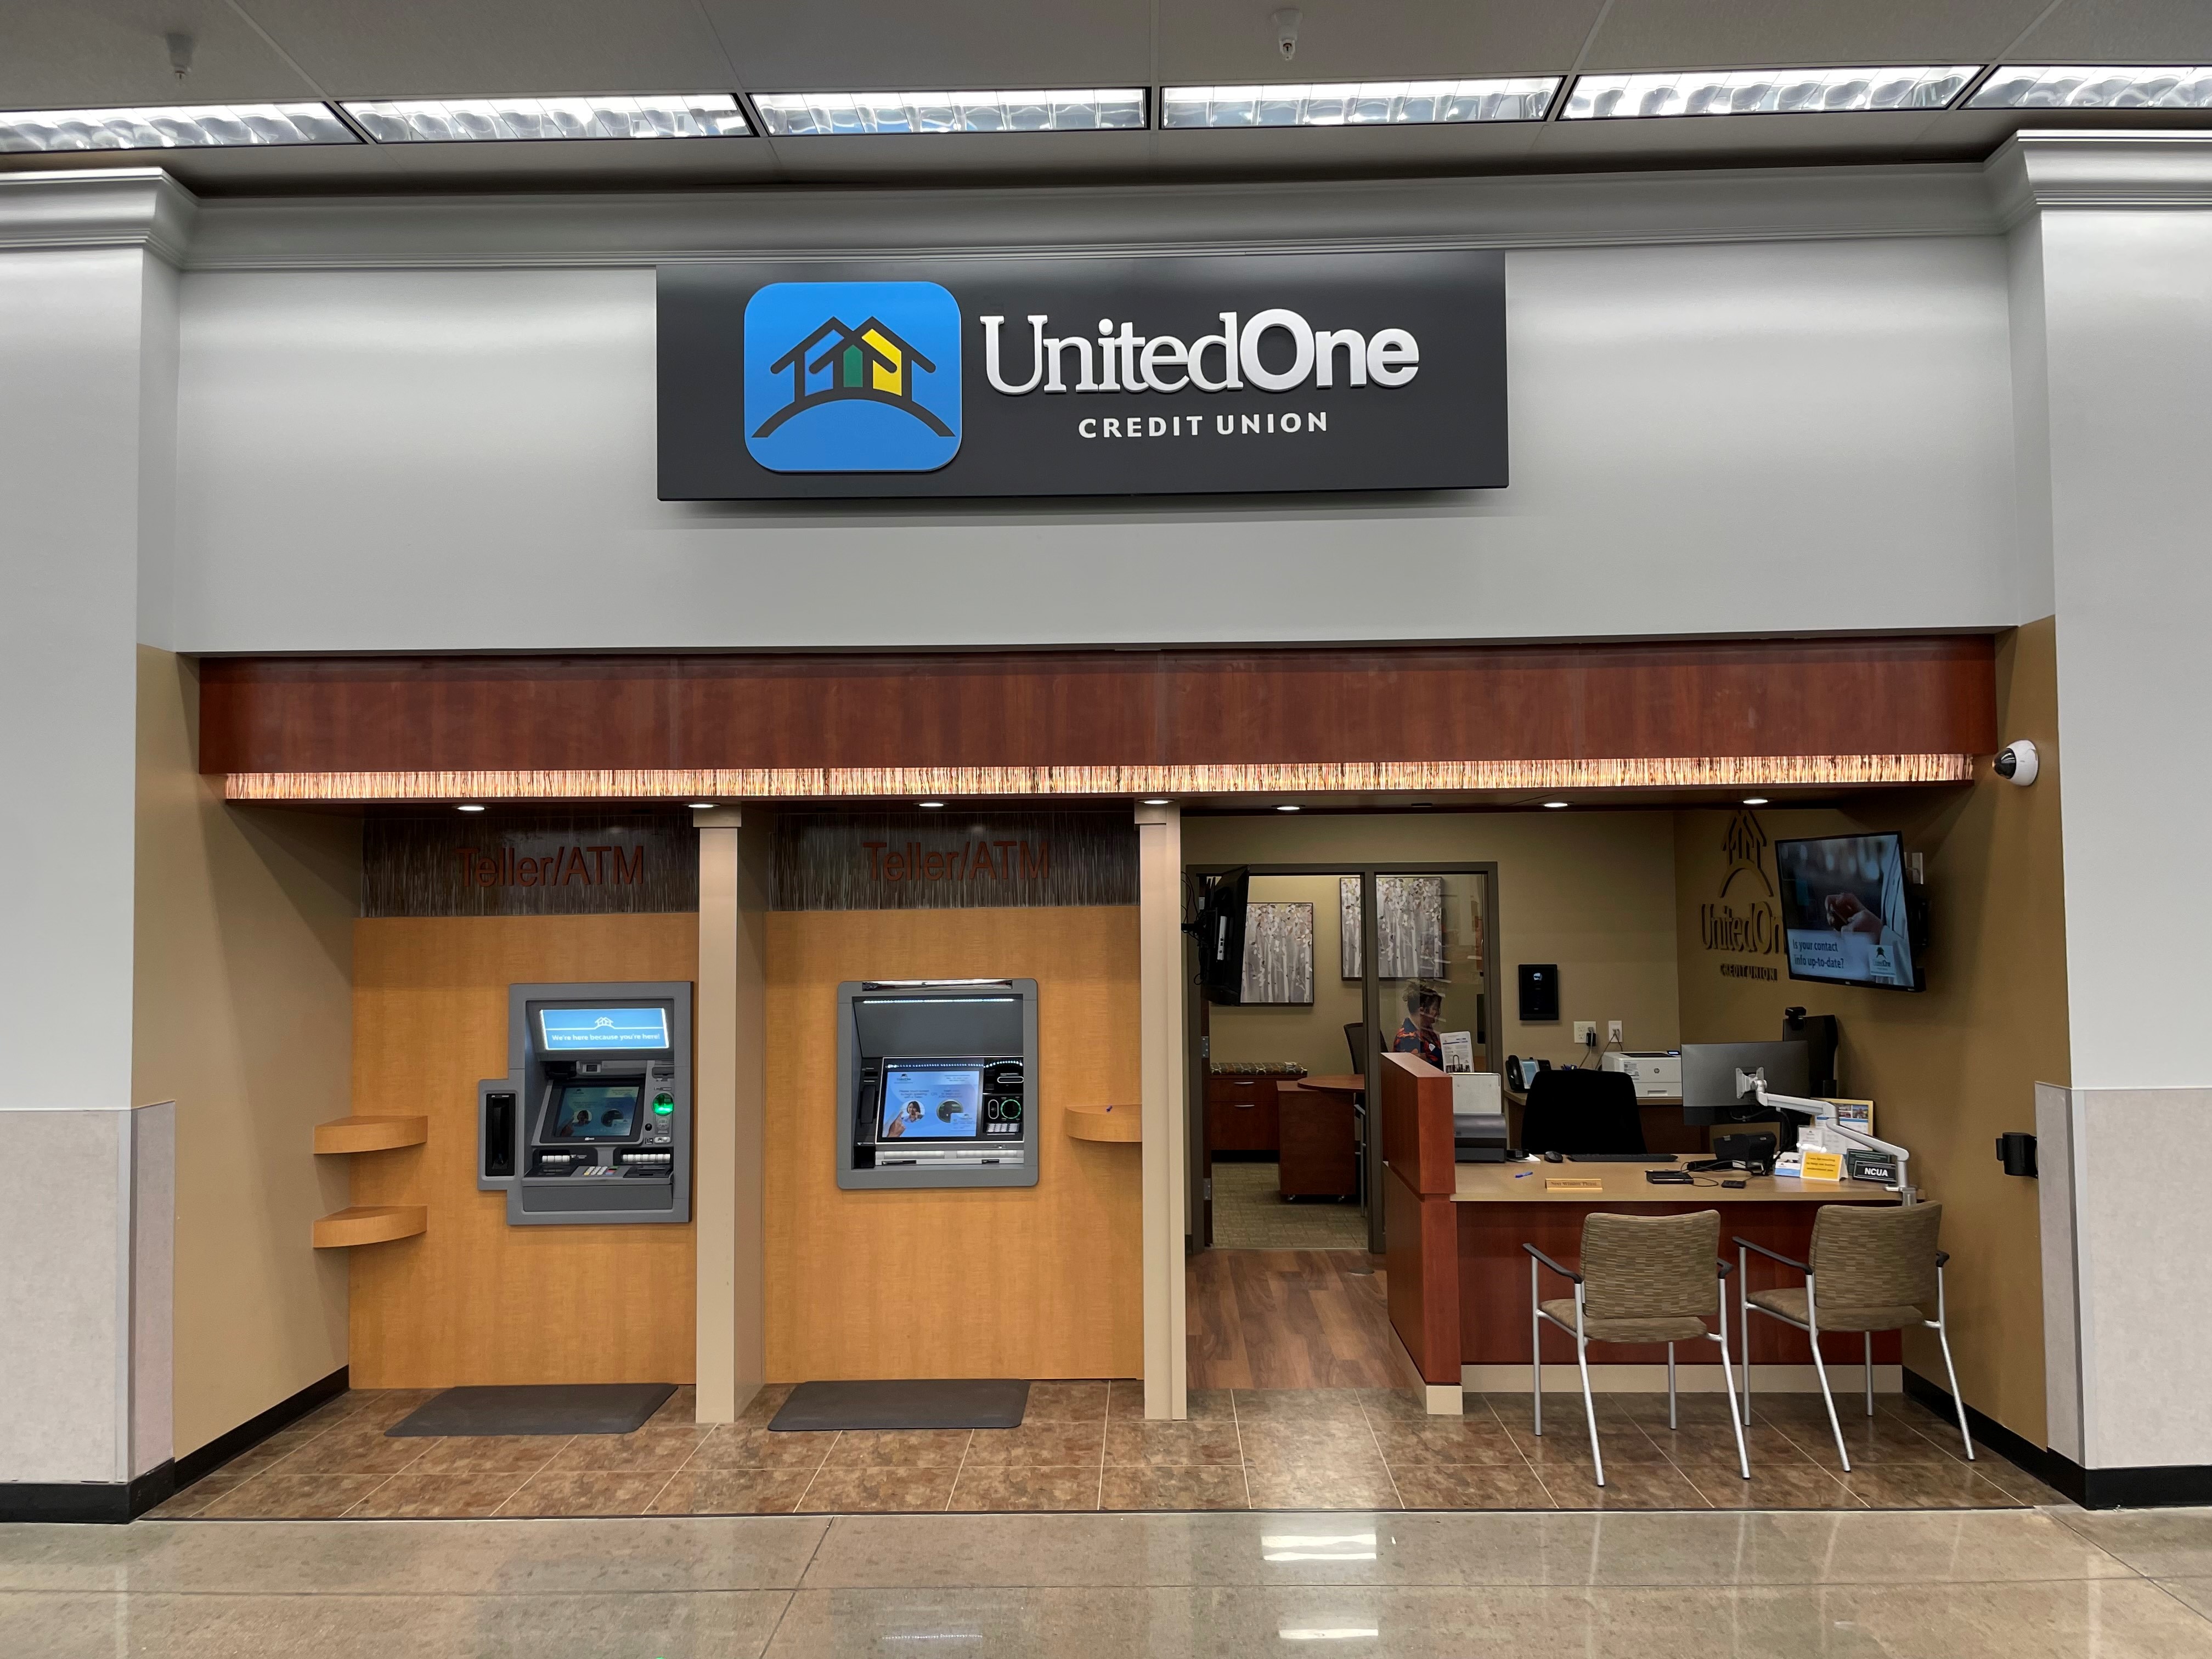 UnitedOne Credit Union Walmart SuperCenter branch in Manitowoc, WI